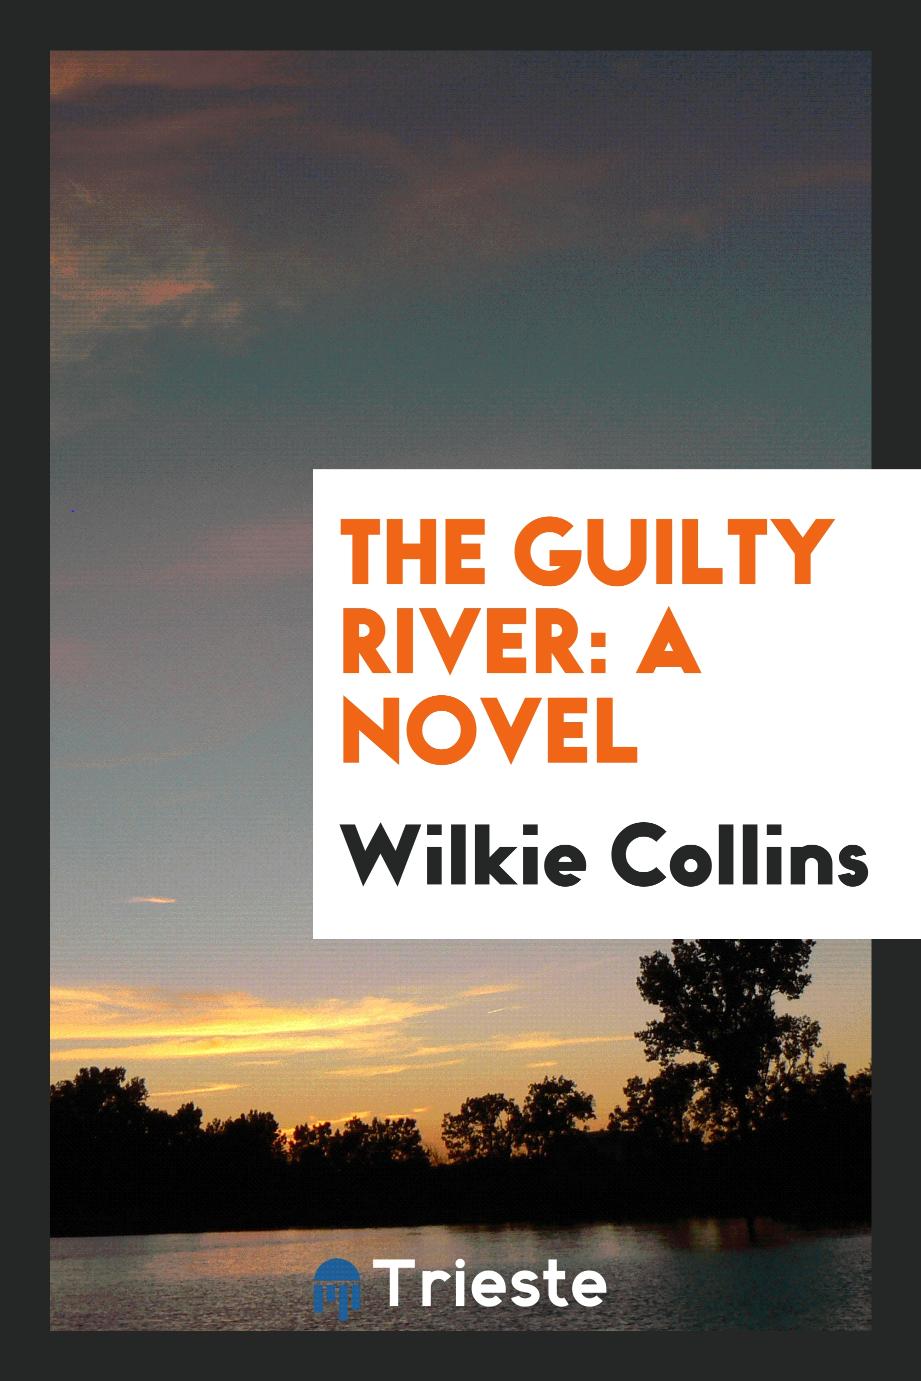 The Guilty River: A Novel